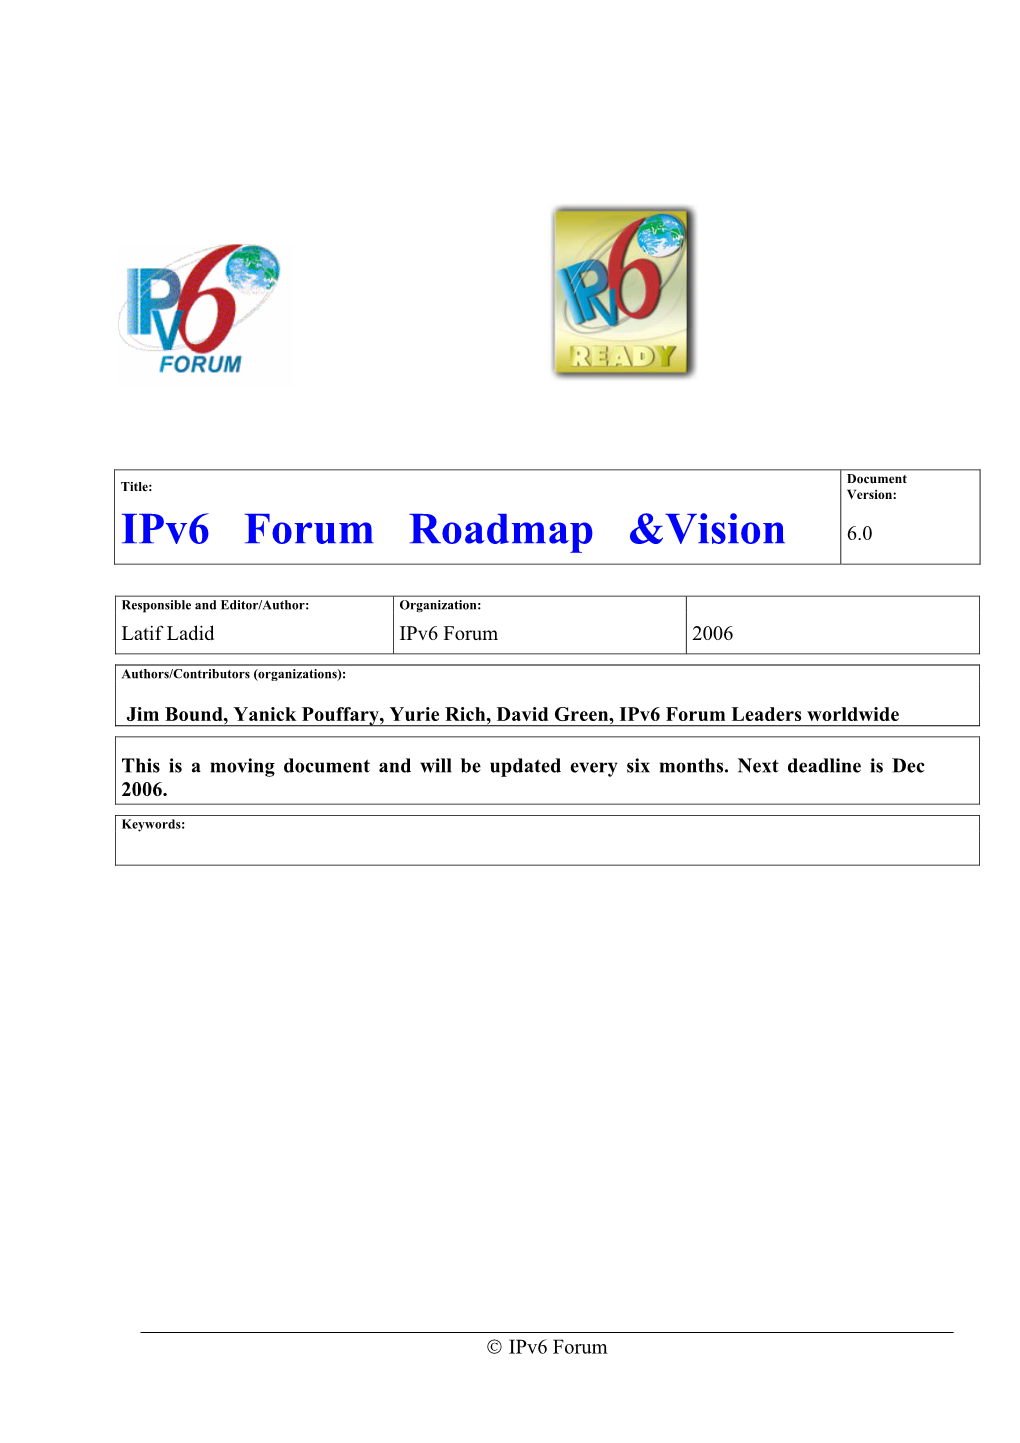 Ipv6 Forum Roadmap & Vision 2010